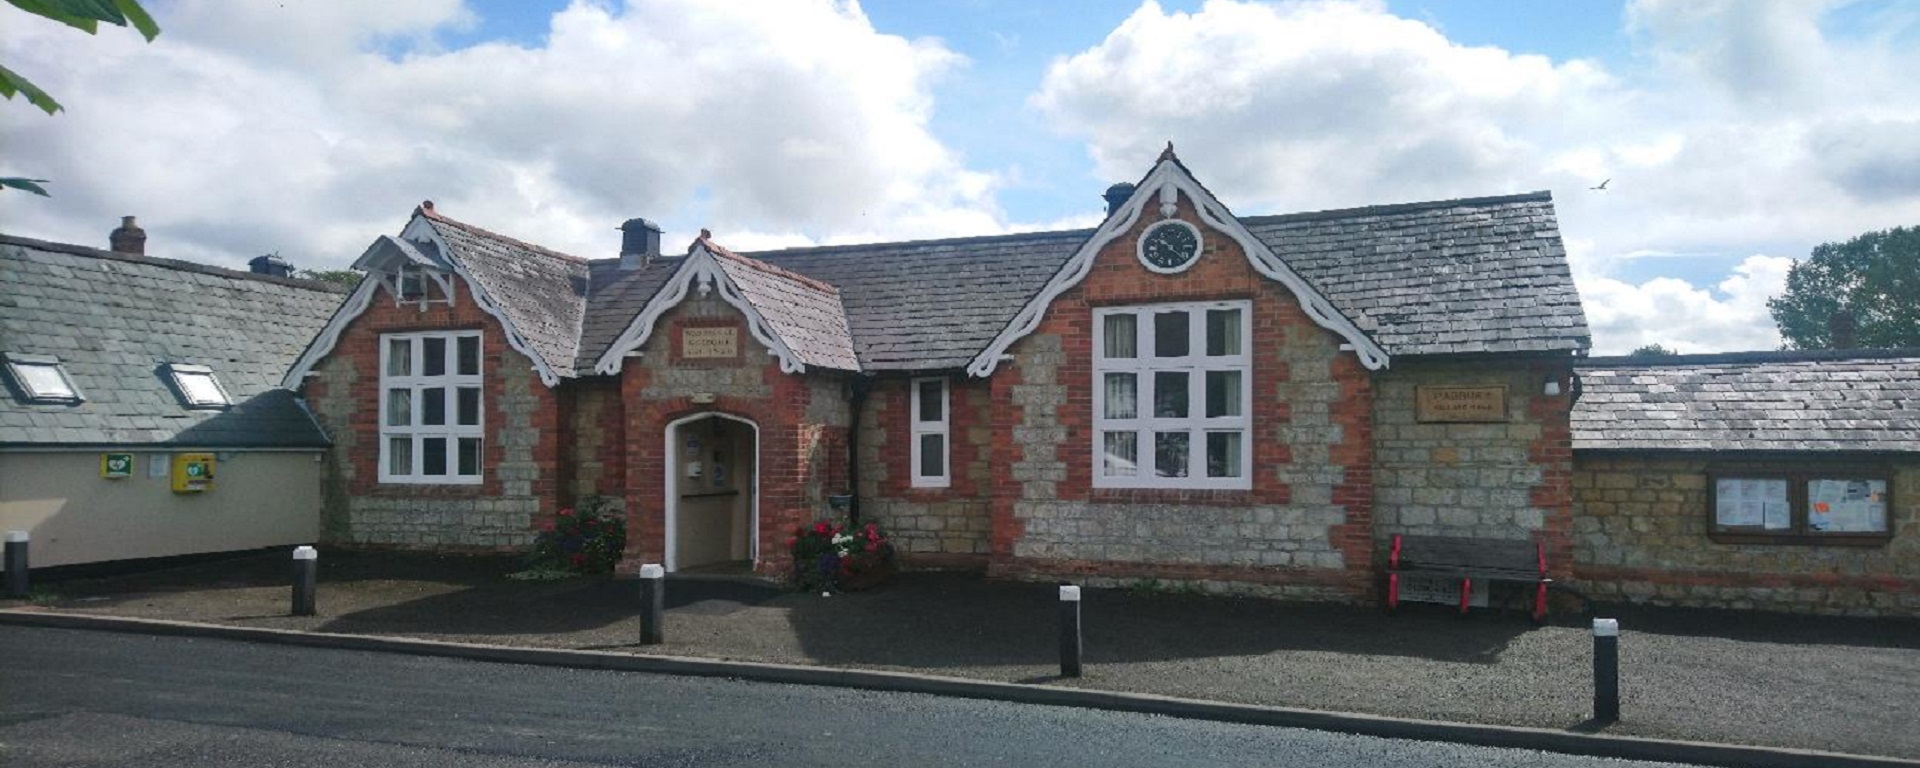 Padbury Village Hall was formerly the village school